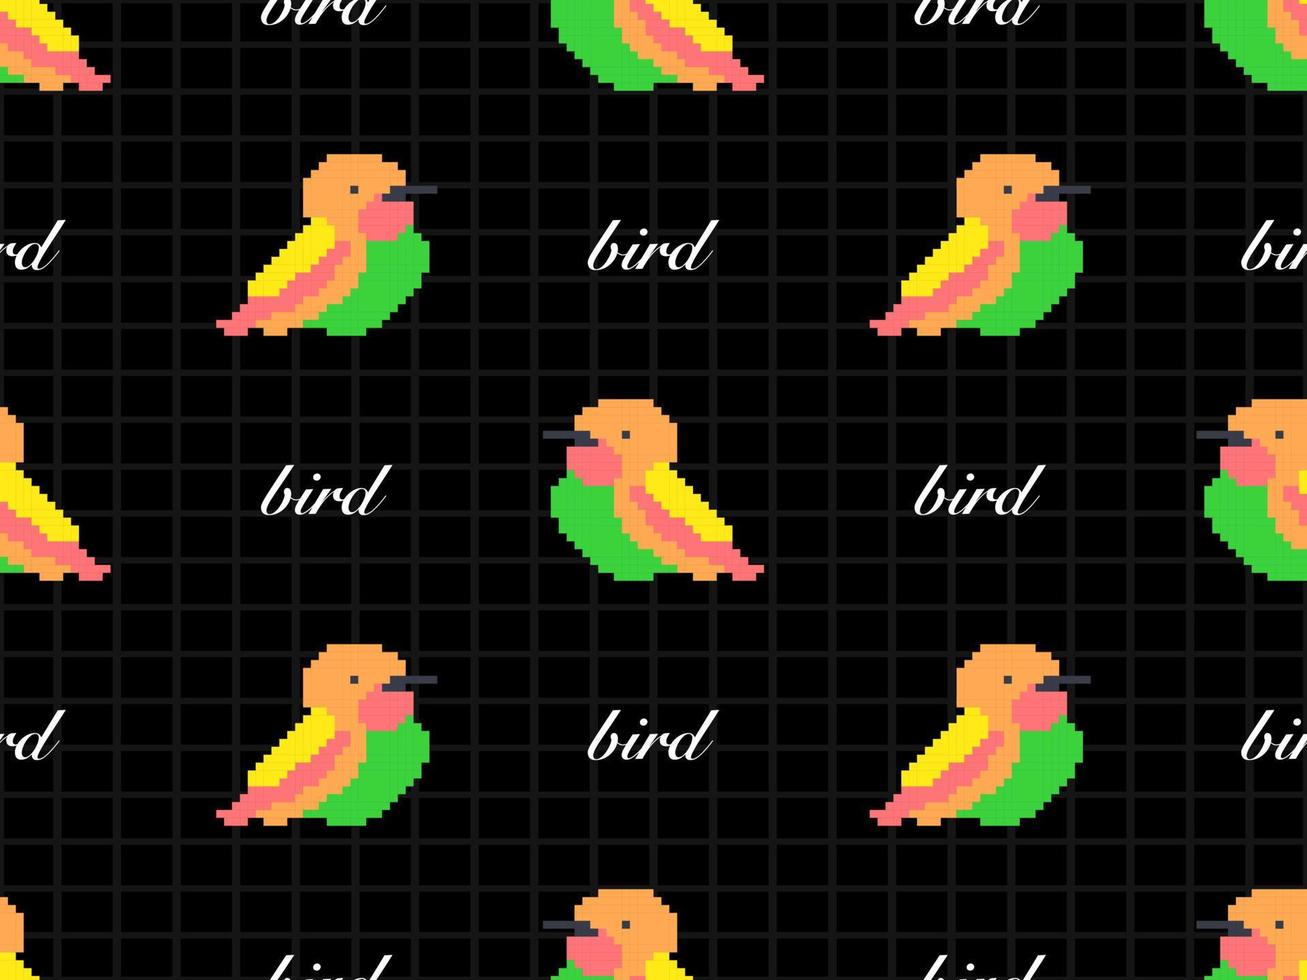 Bird cartoon character seamless pattern on black background.  Pixel style vector